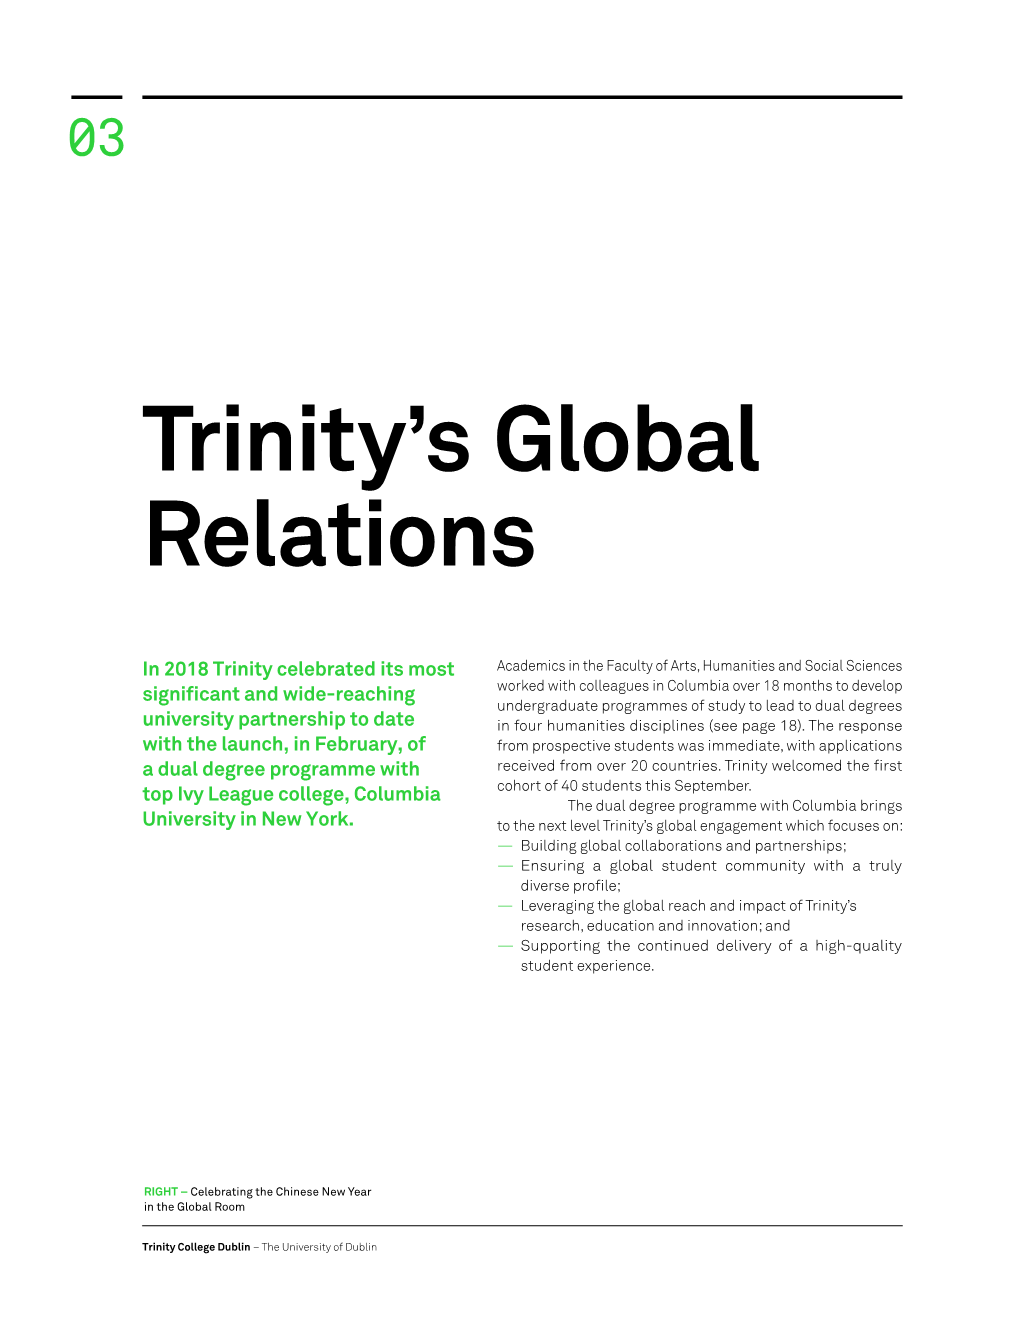 Trinity's Global Relations